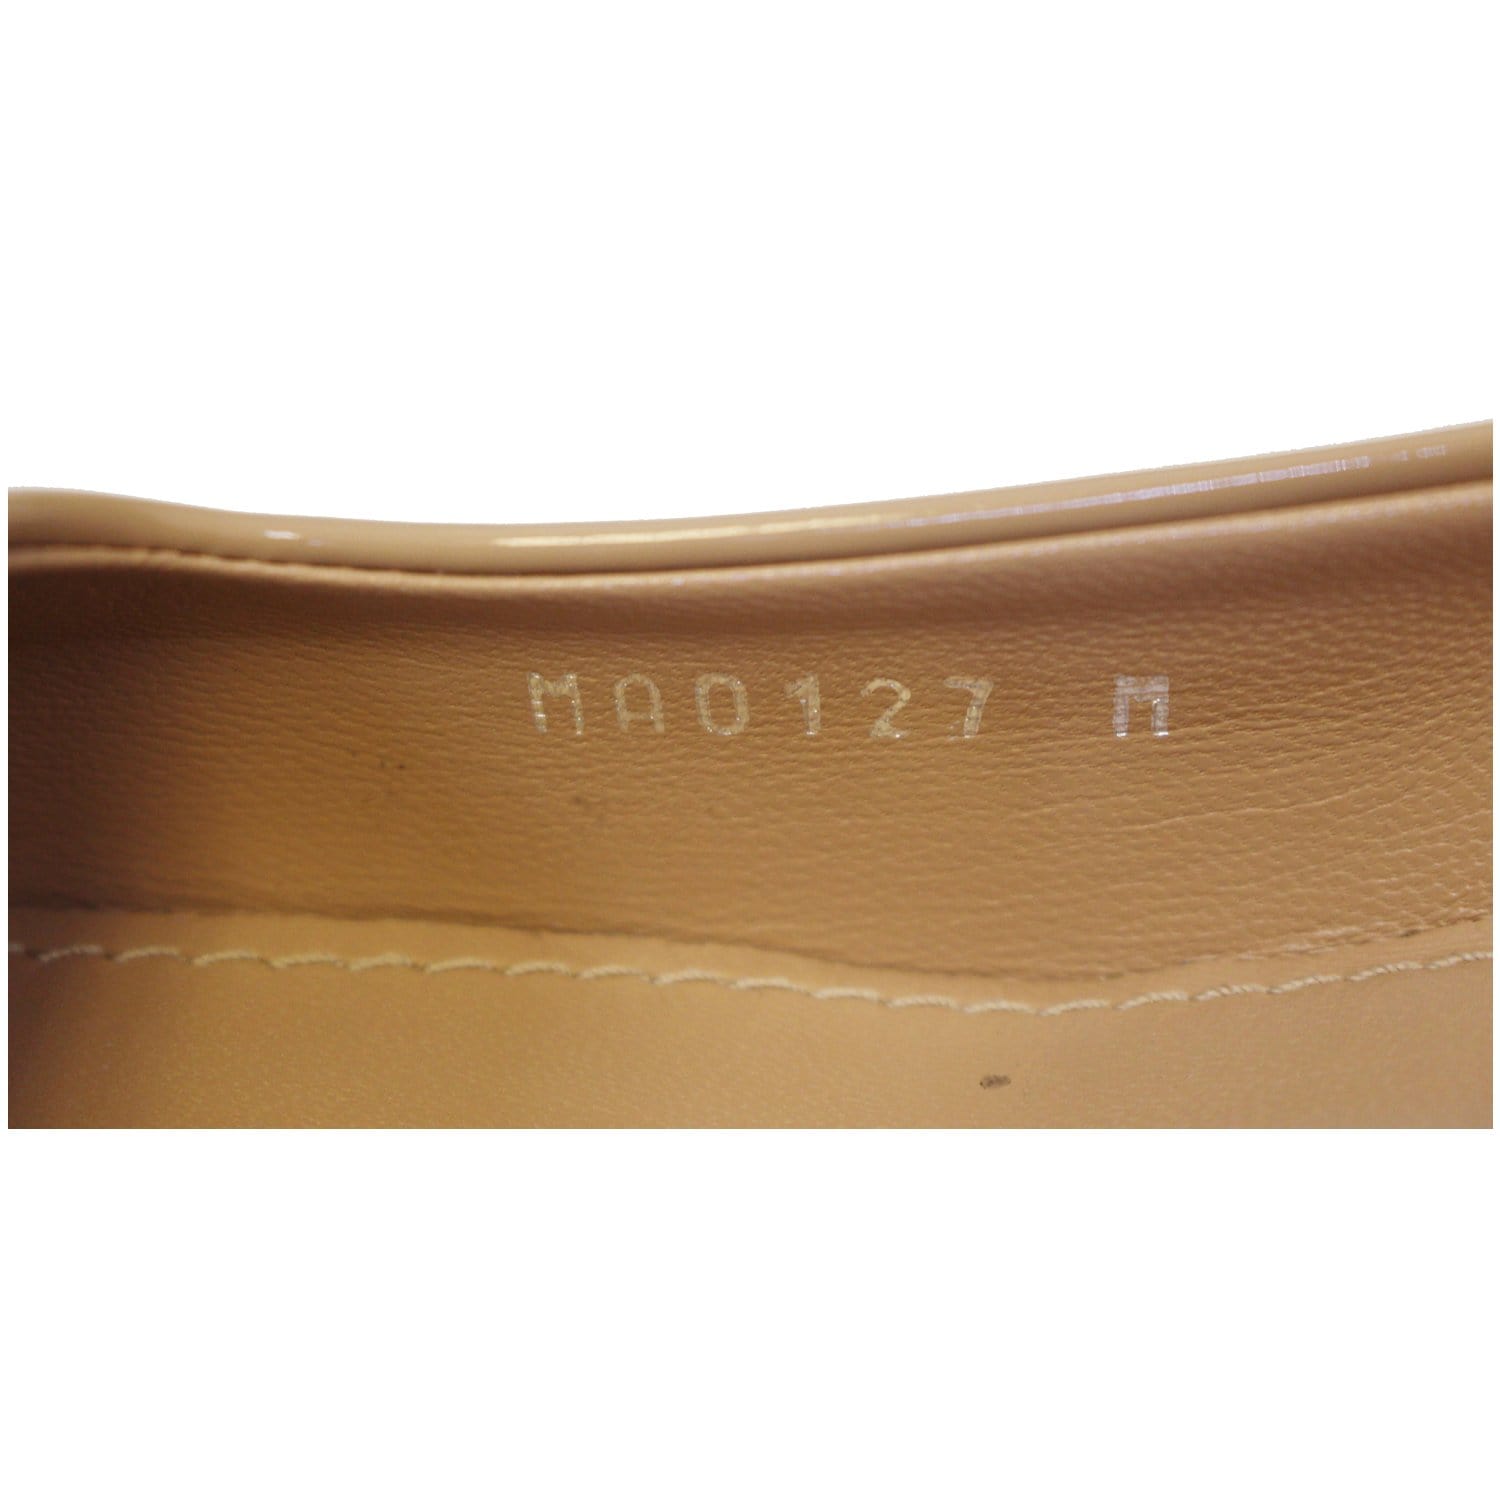 Louis Vuitton Black Patent Leather Logo Slip On Loafers Size 41 Louis  Vuitton